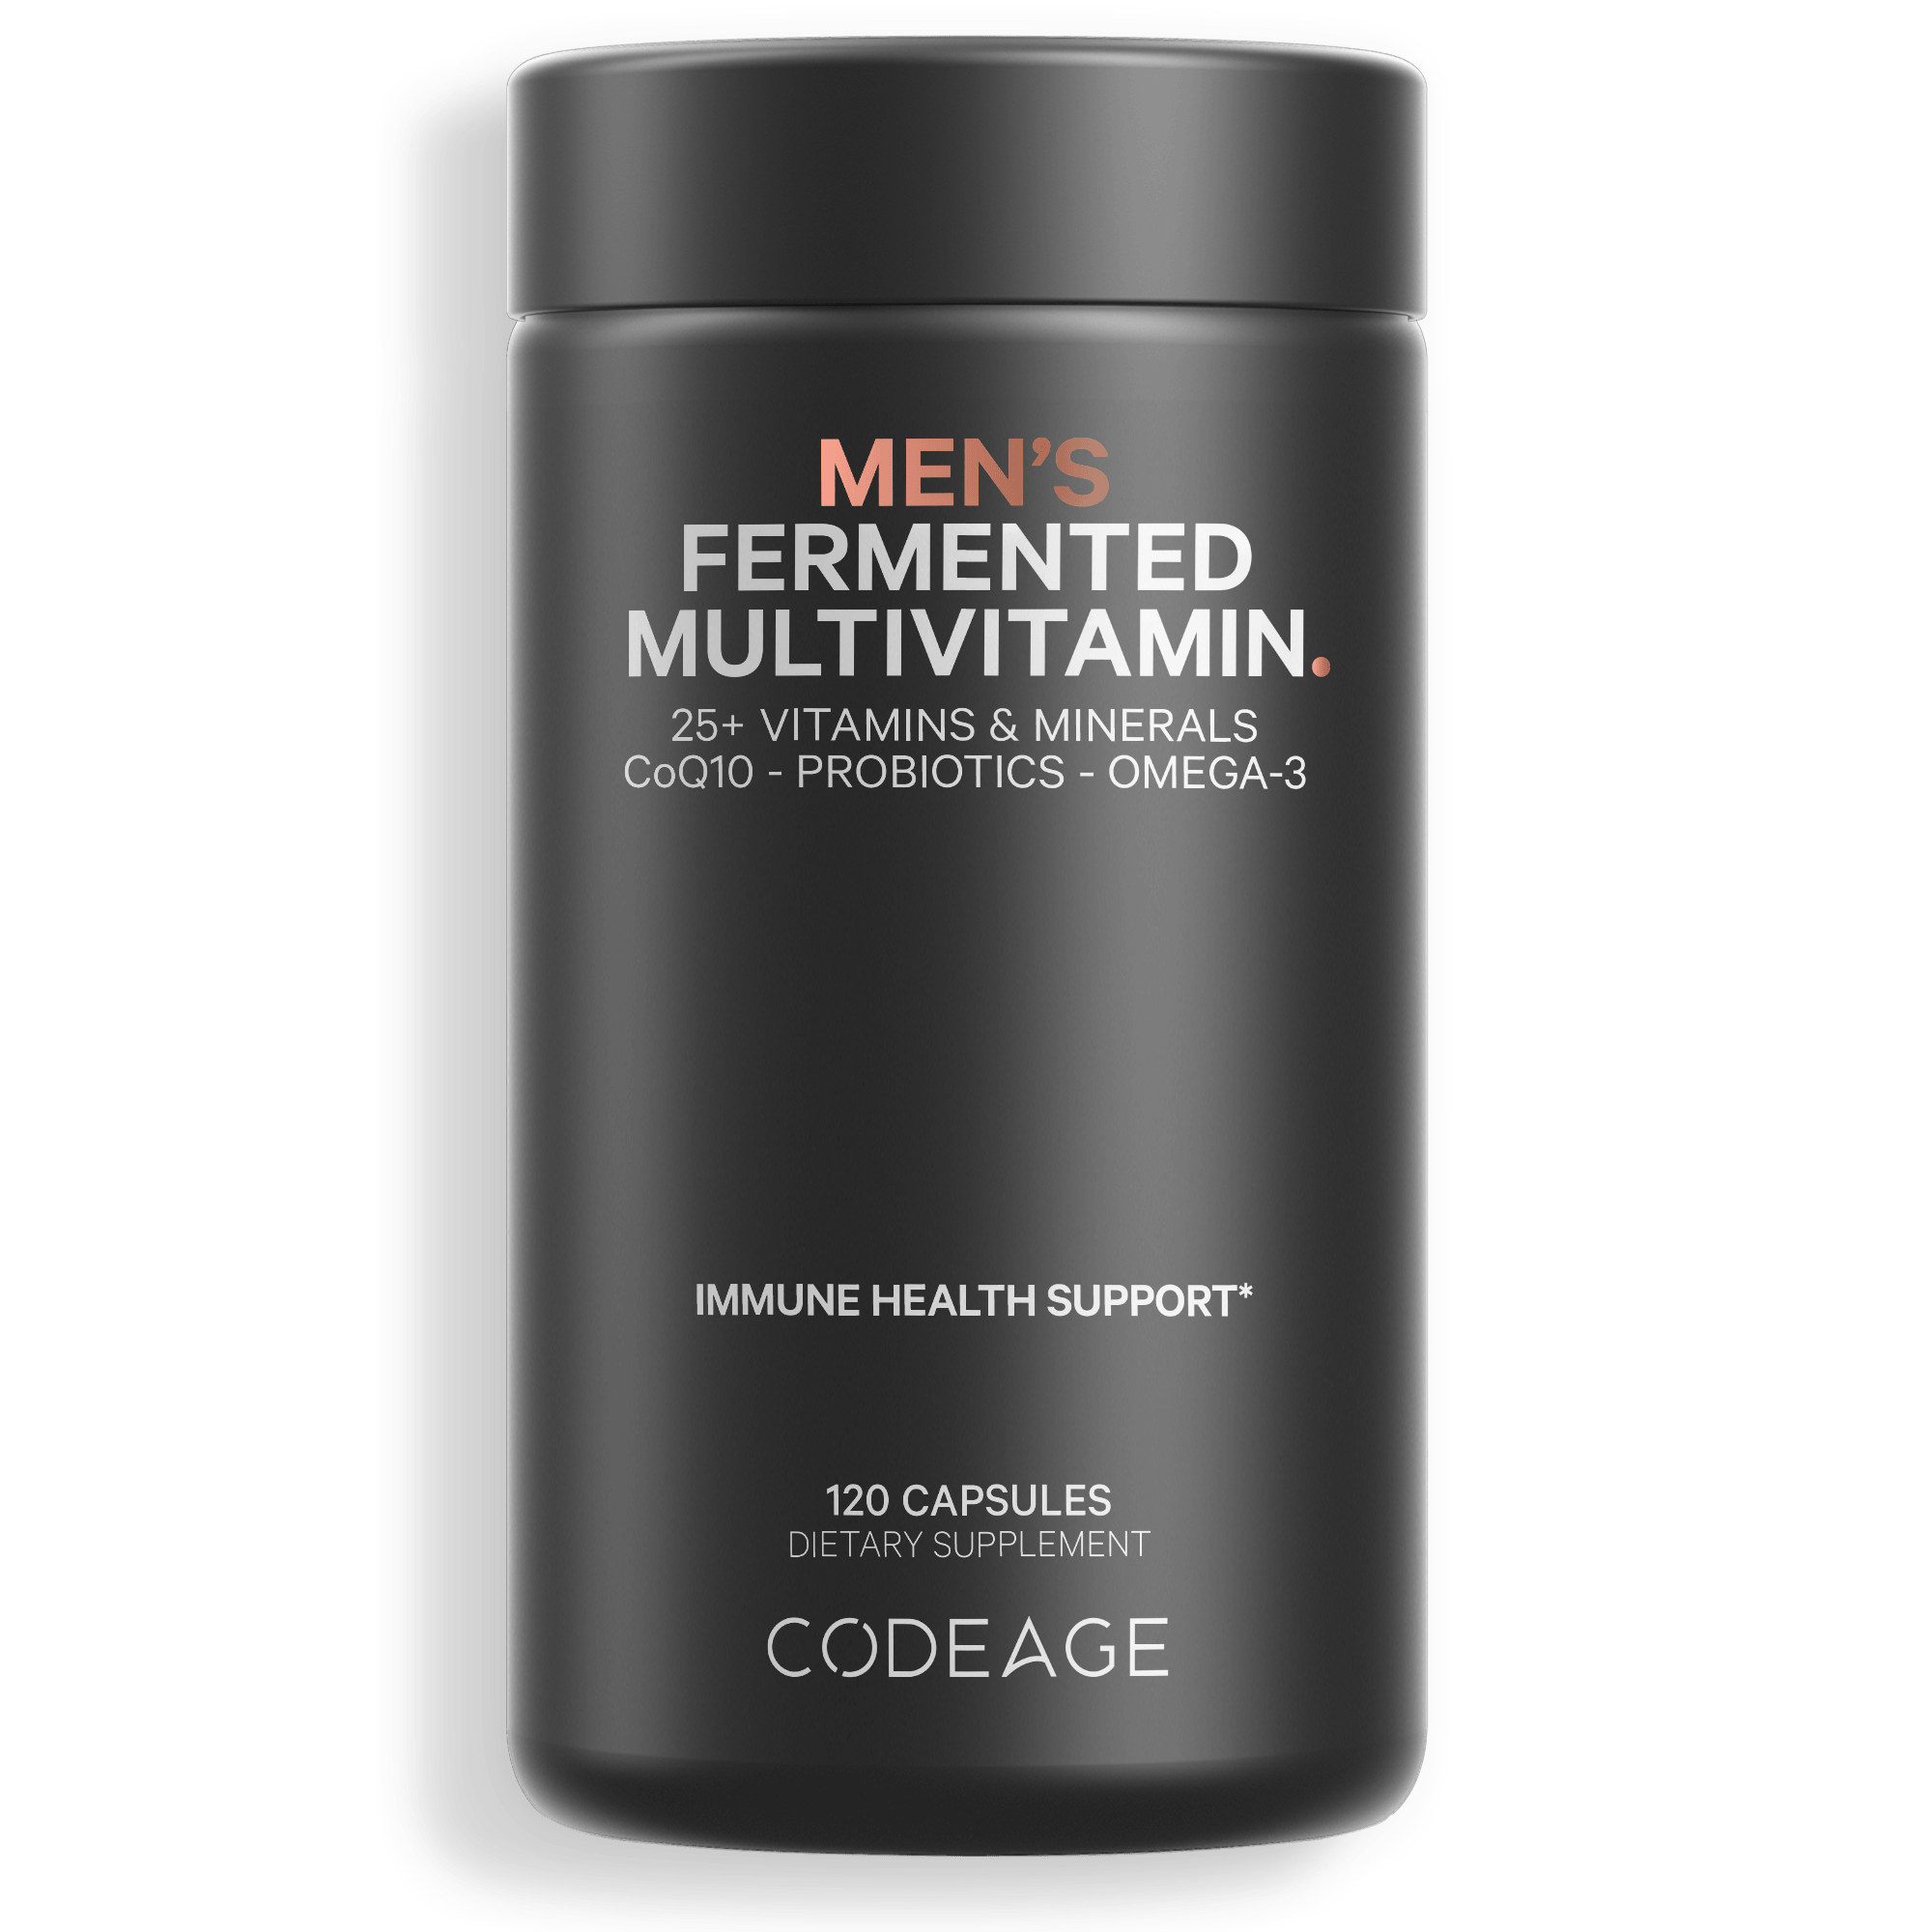 Codeage Multivitamin For Men Daily Vitamins For Men And Minerals Vegan